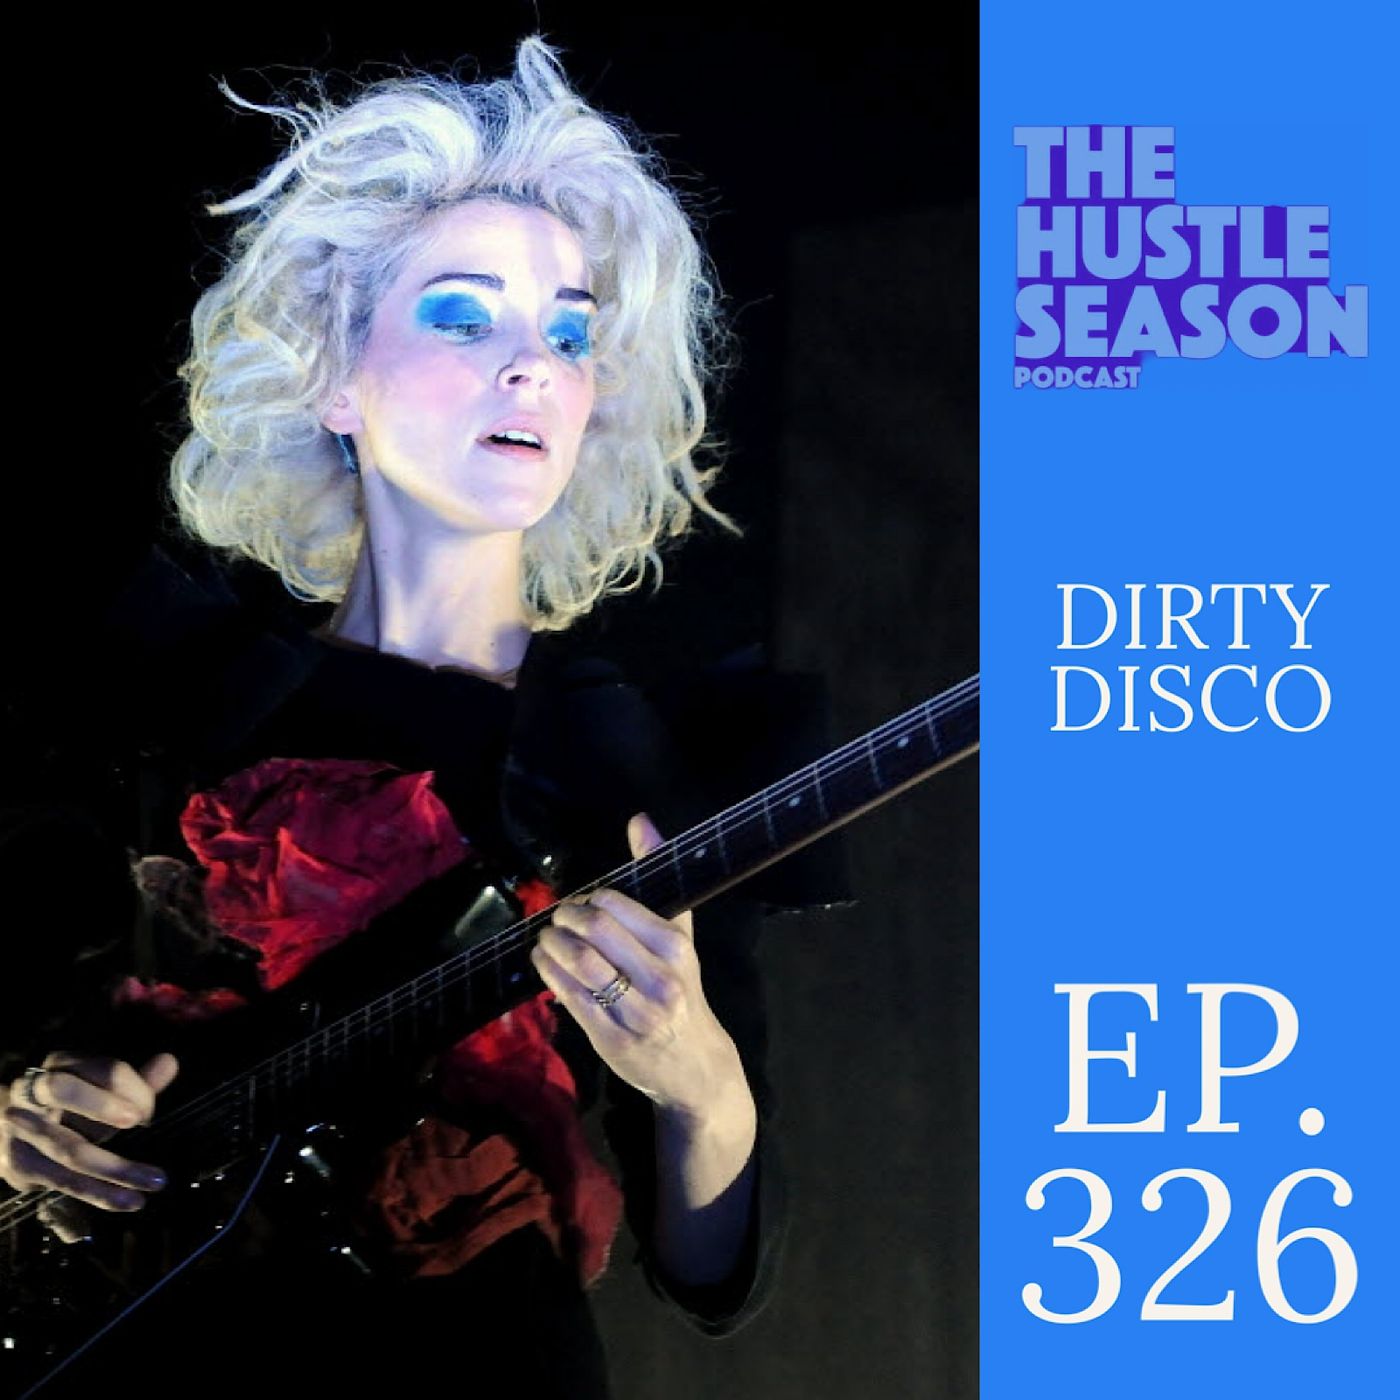 The Hustle Season: Ep. 326 Dirty Disco